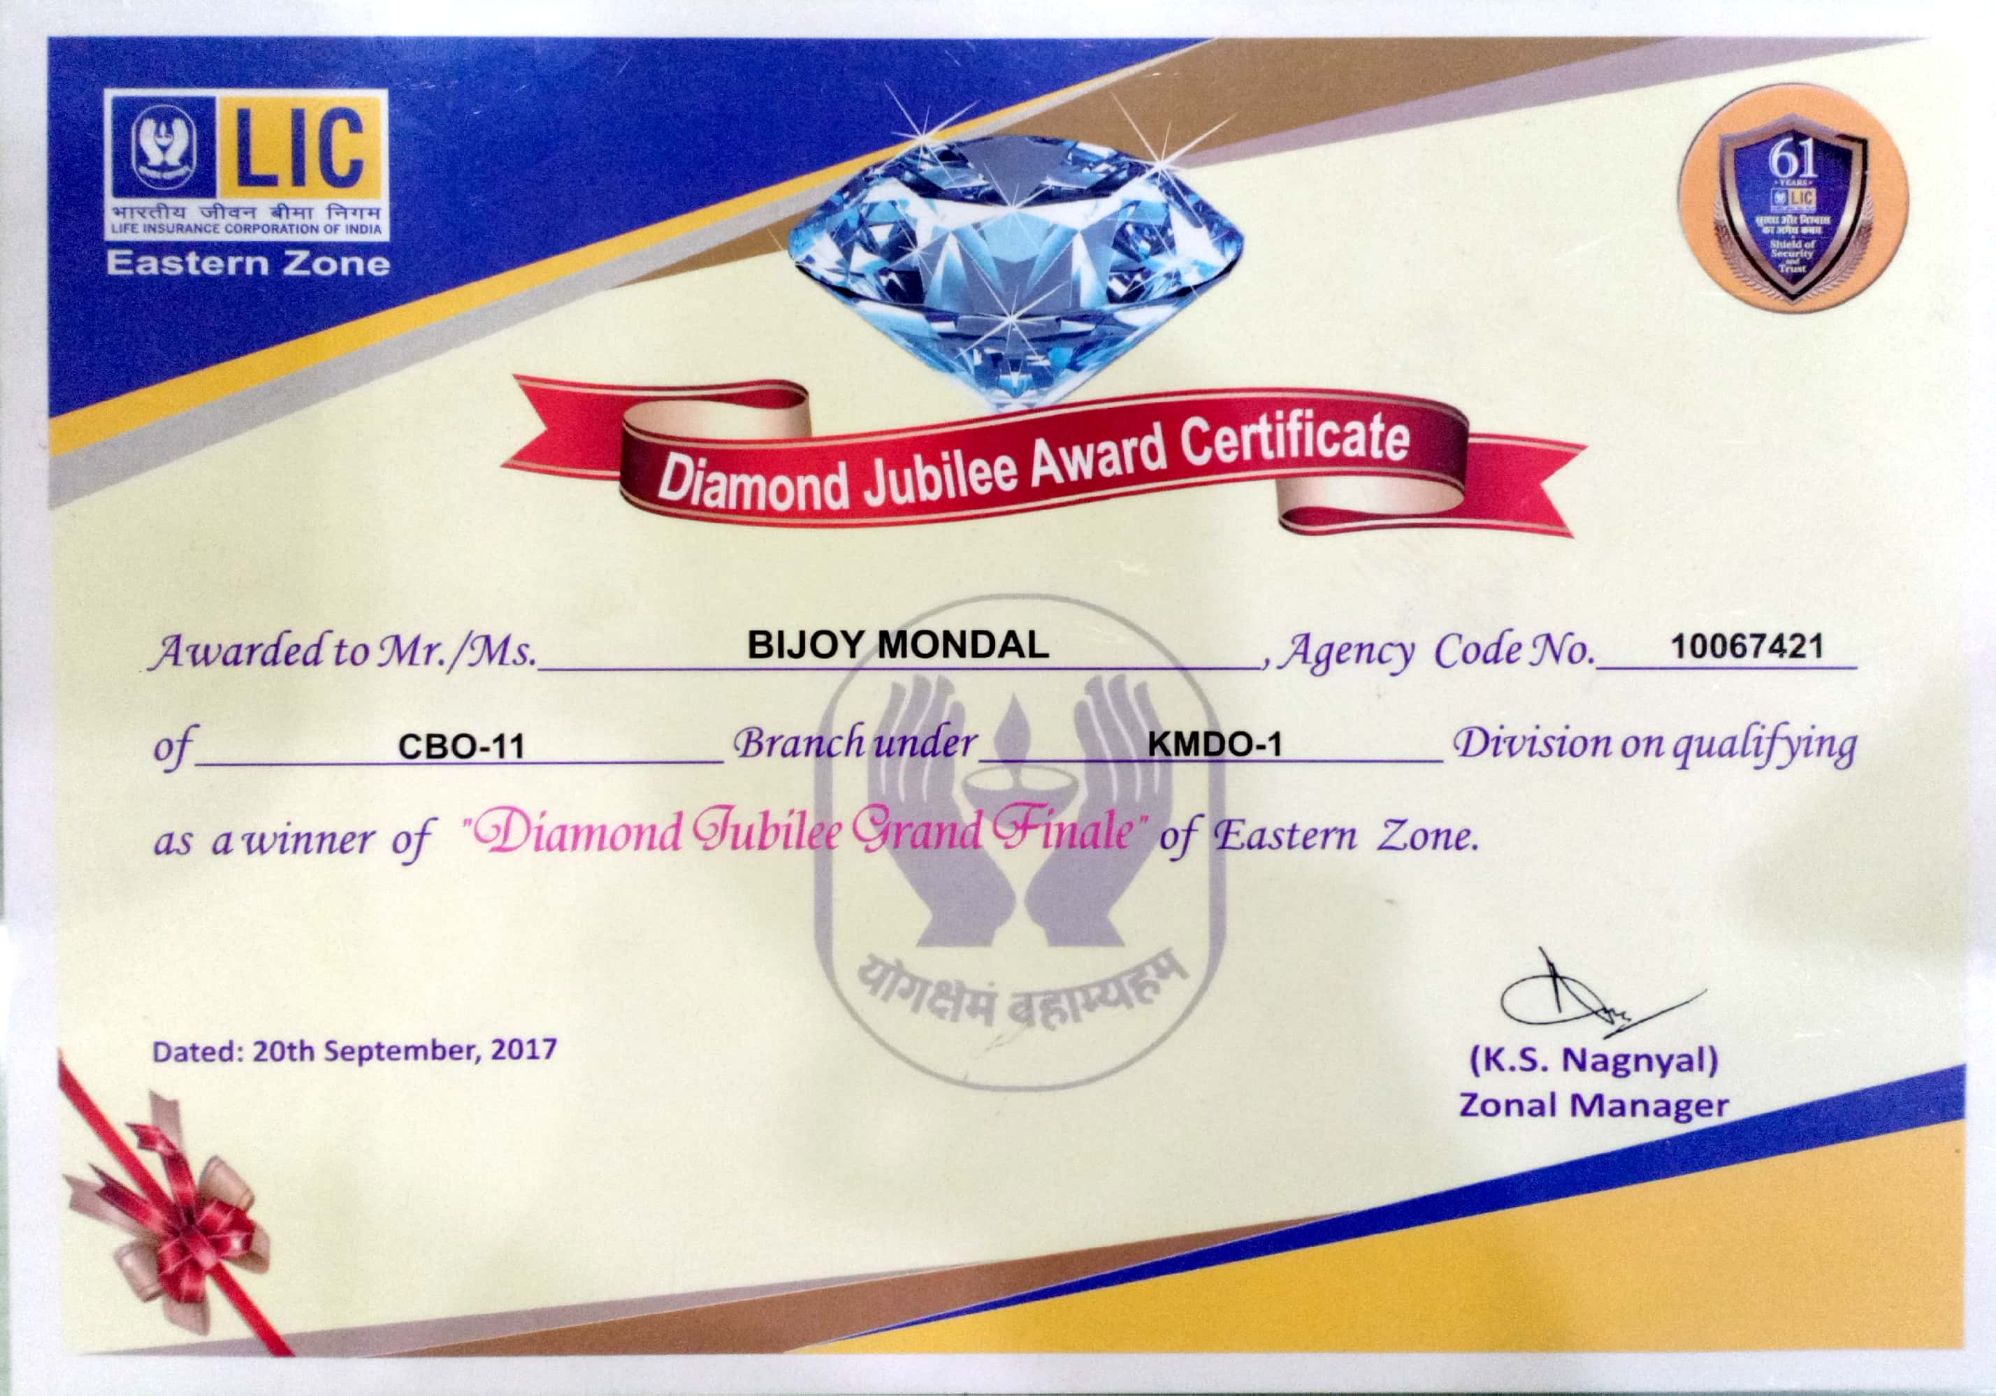 Diamond Jubilee Award Certificate 2017